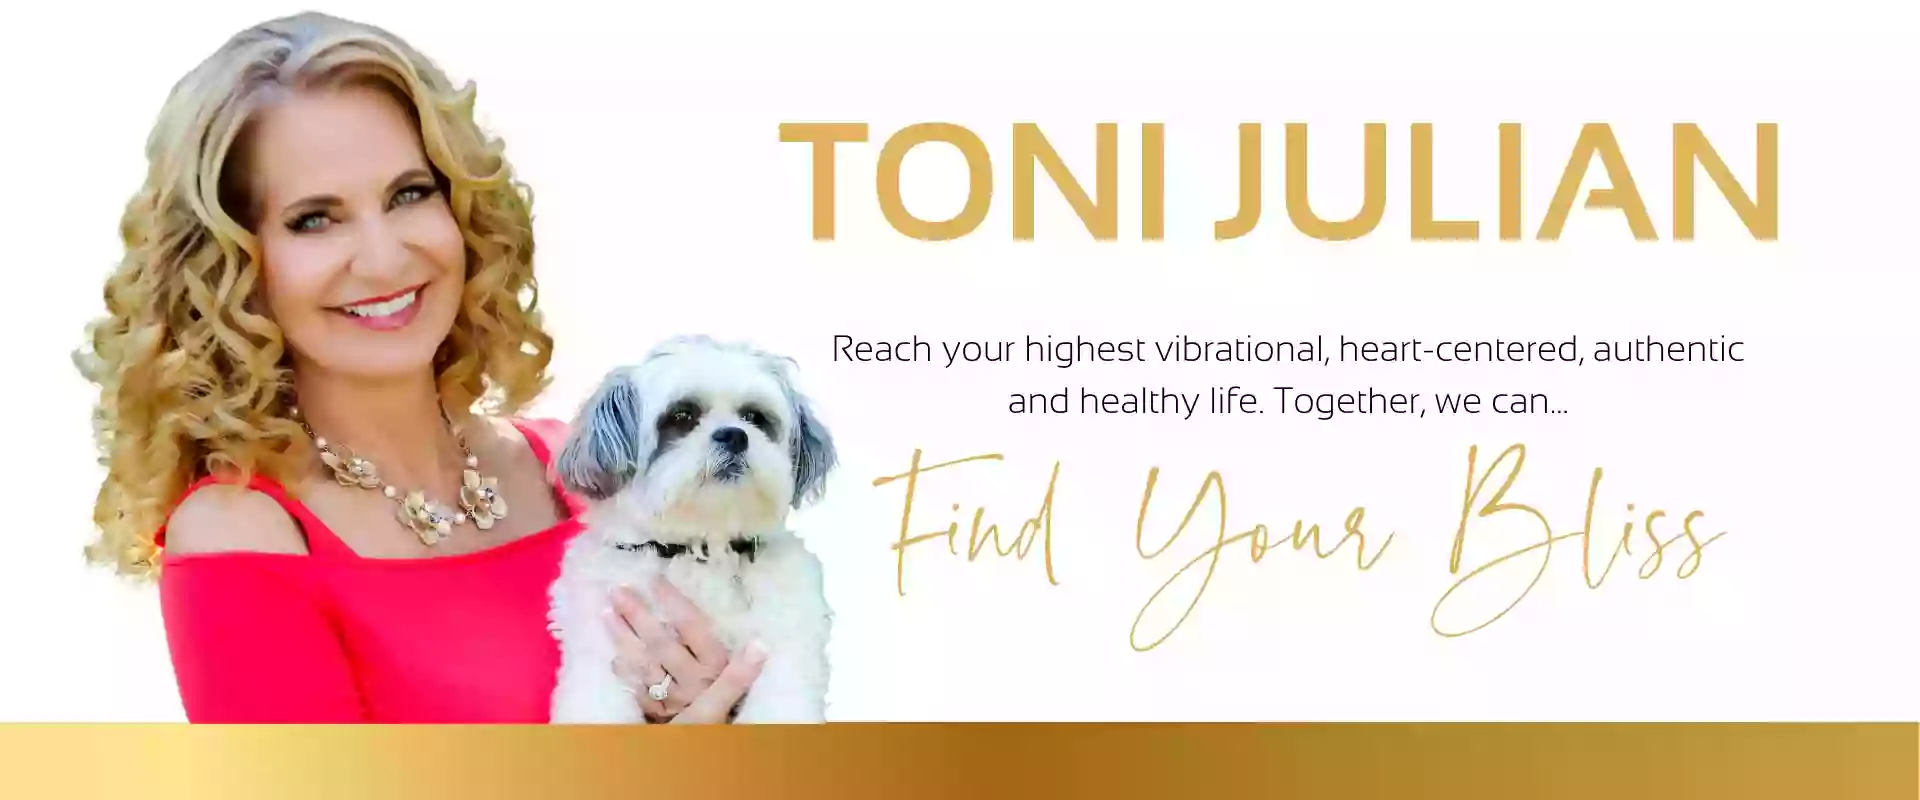 Toni Julian | Soul Potential Institute